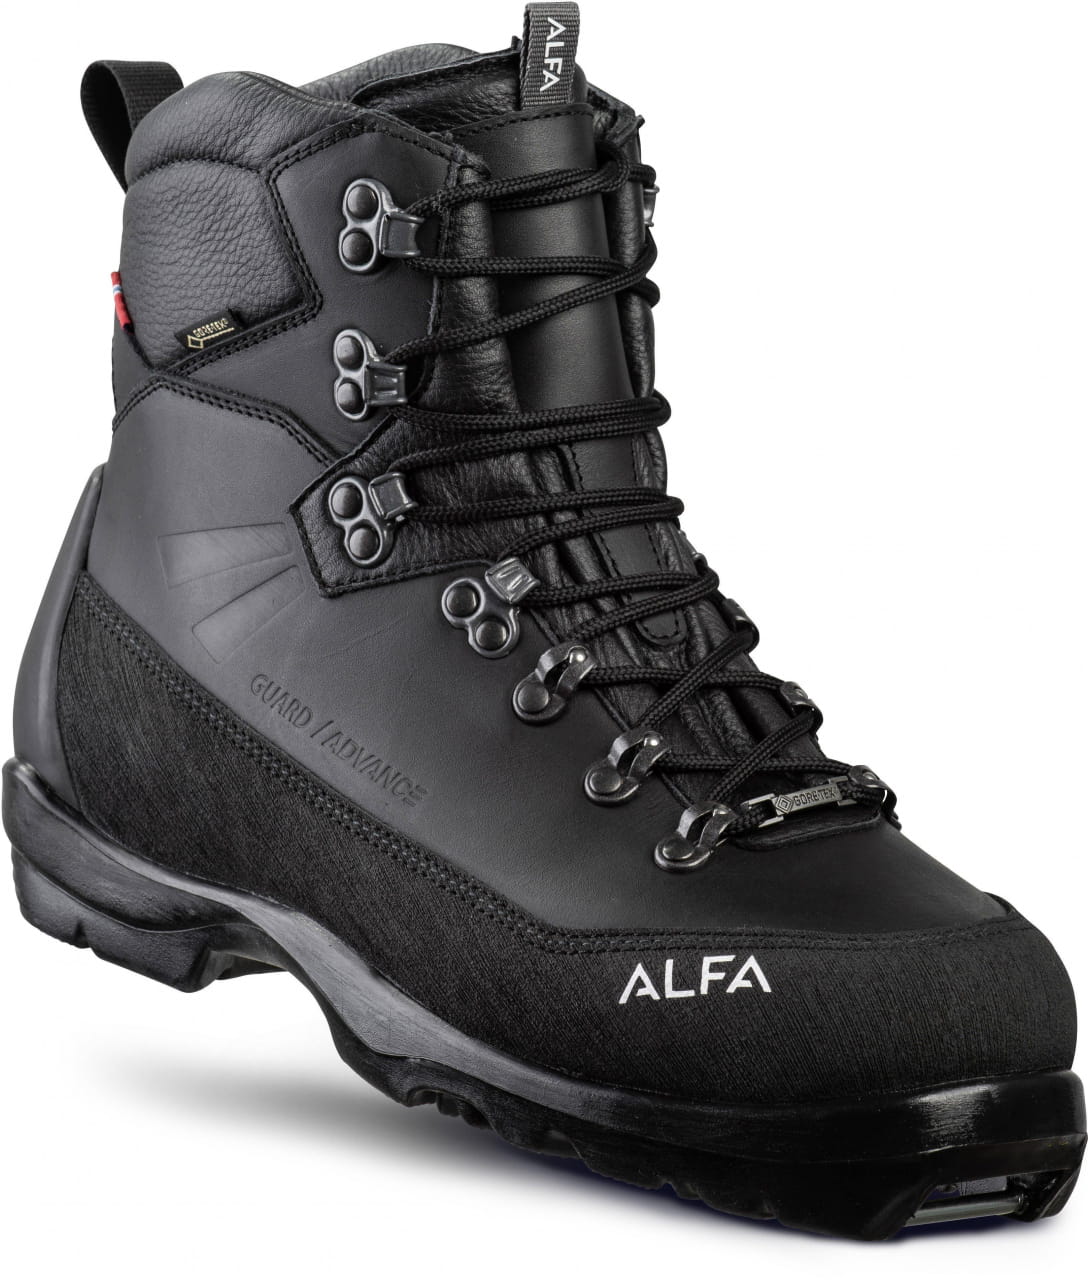 Langlaufschoenen voor heren Alfa Guard Advance GTX M